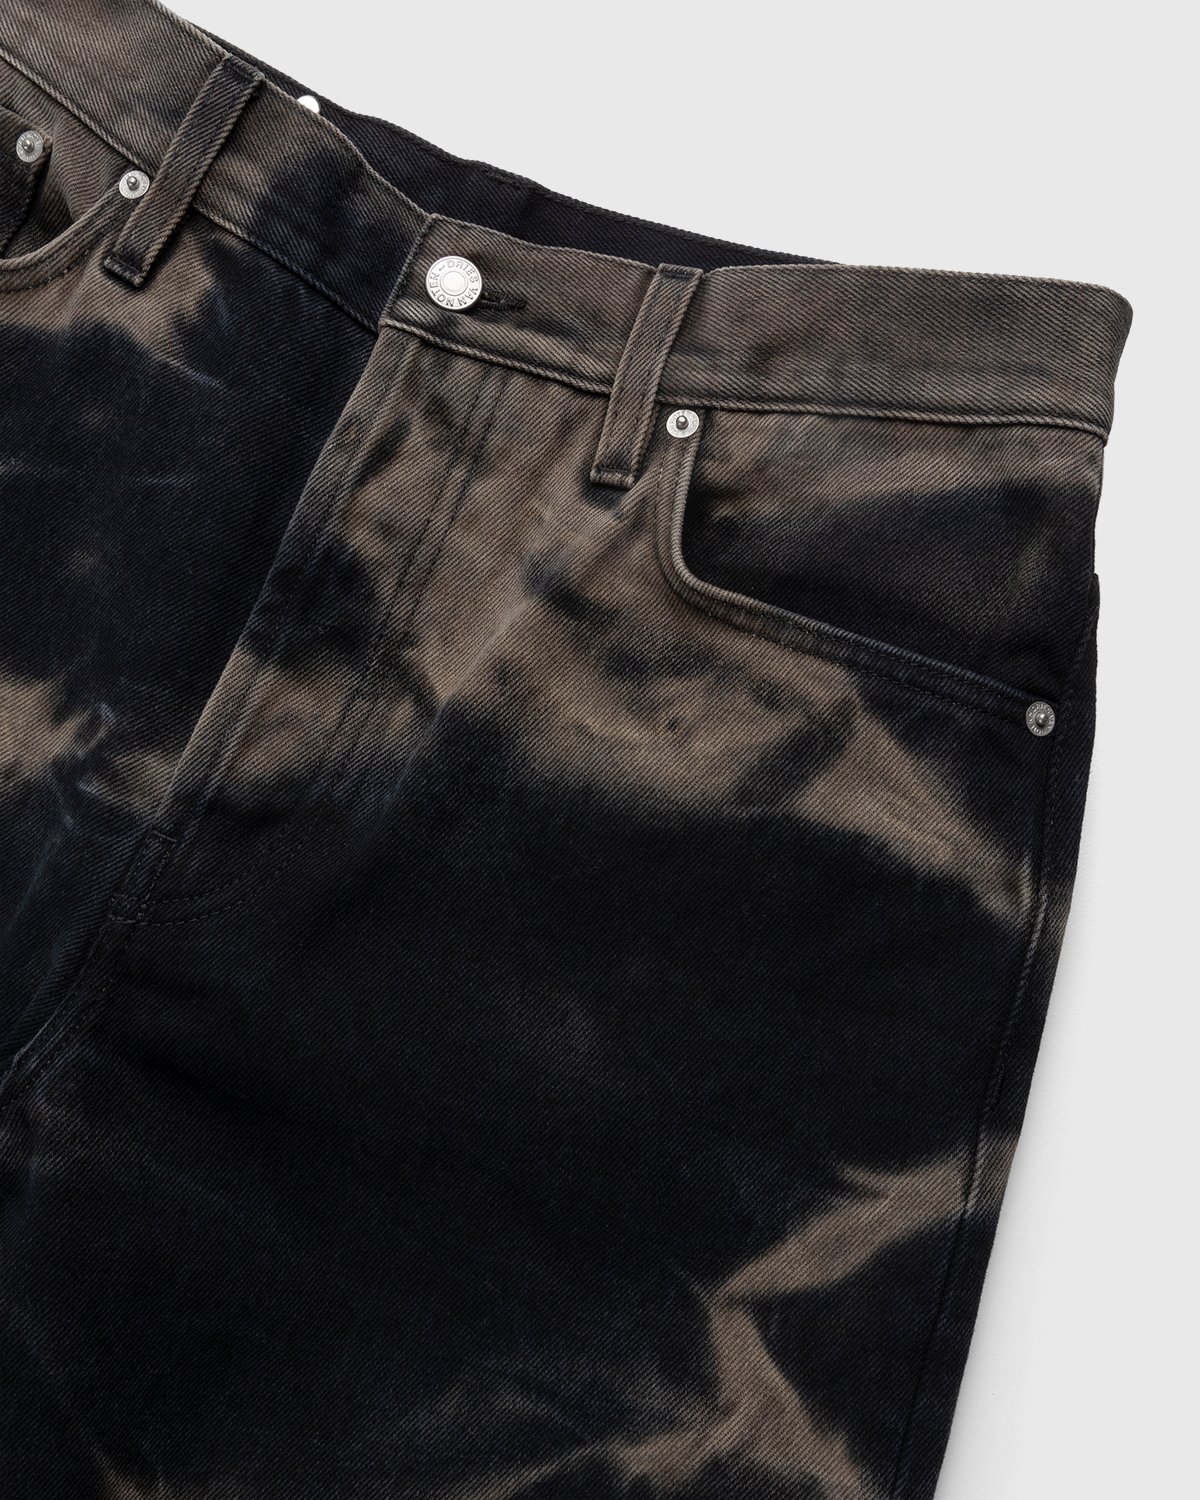 Dries van Noten - Pine Acid Wash Jeans Black - Clothing - Black - Image 5